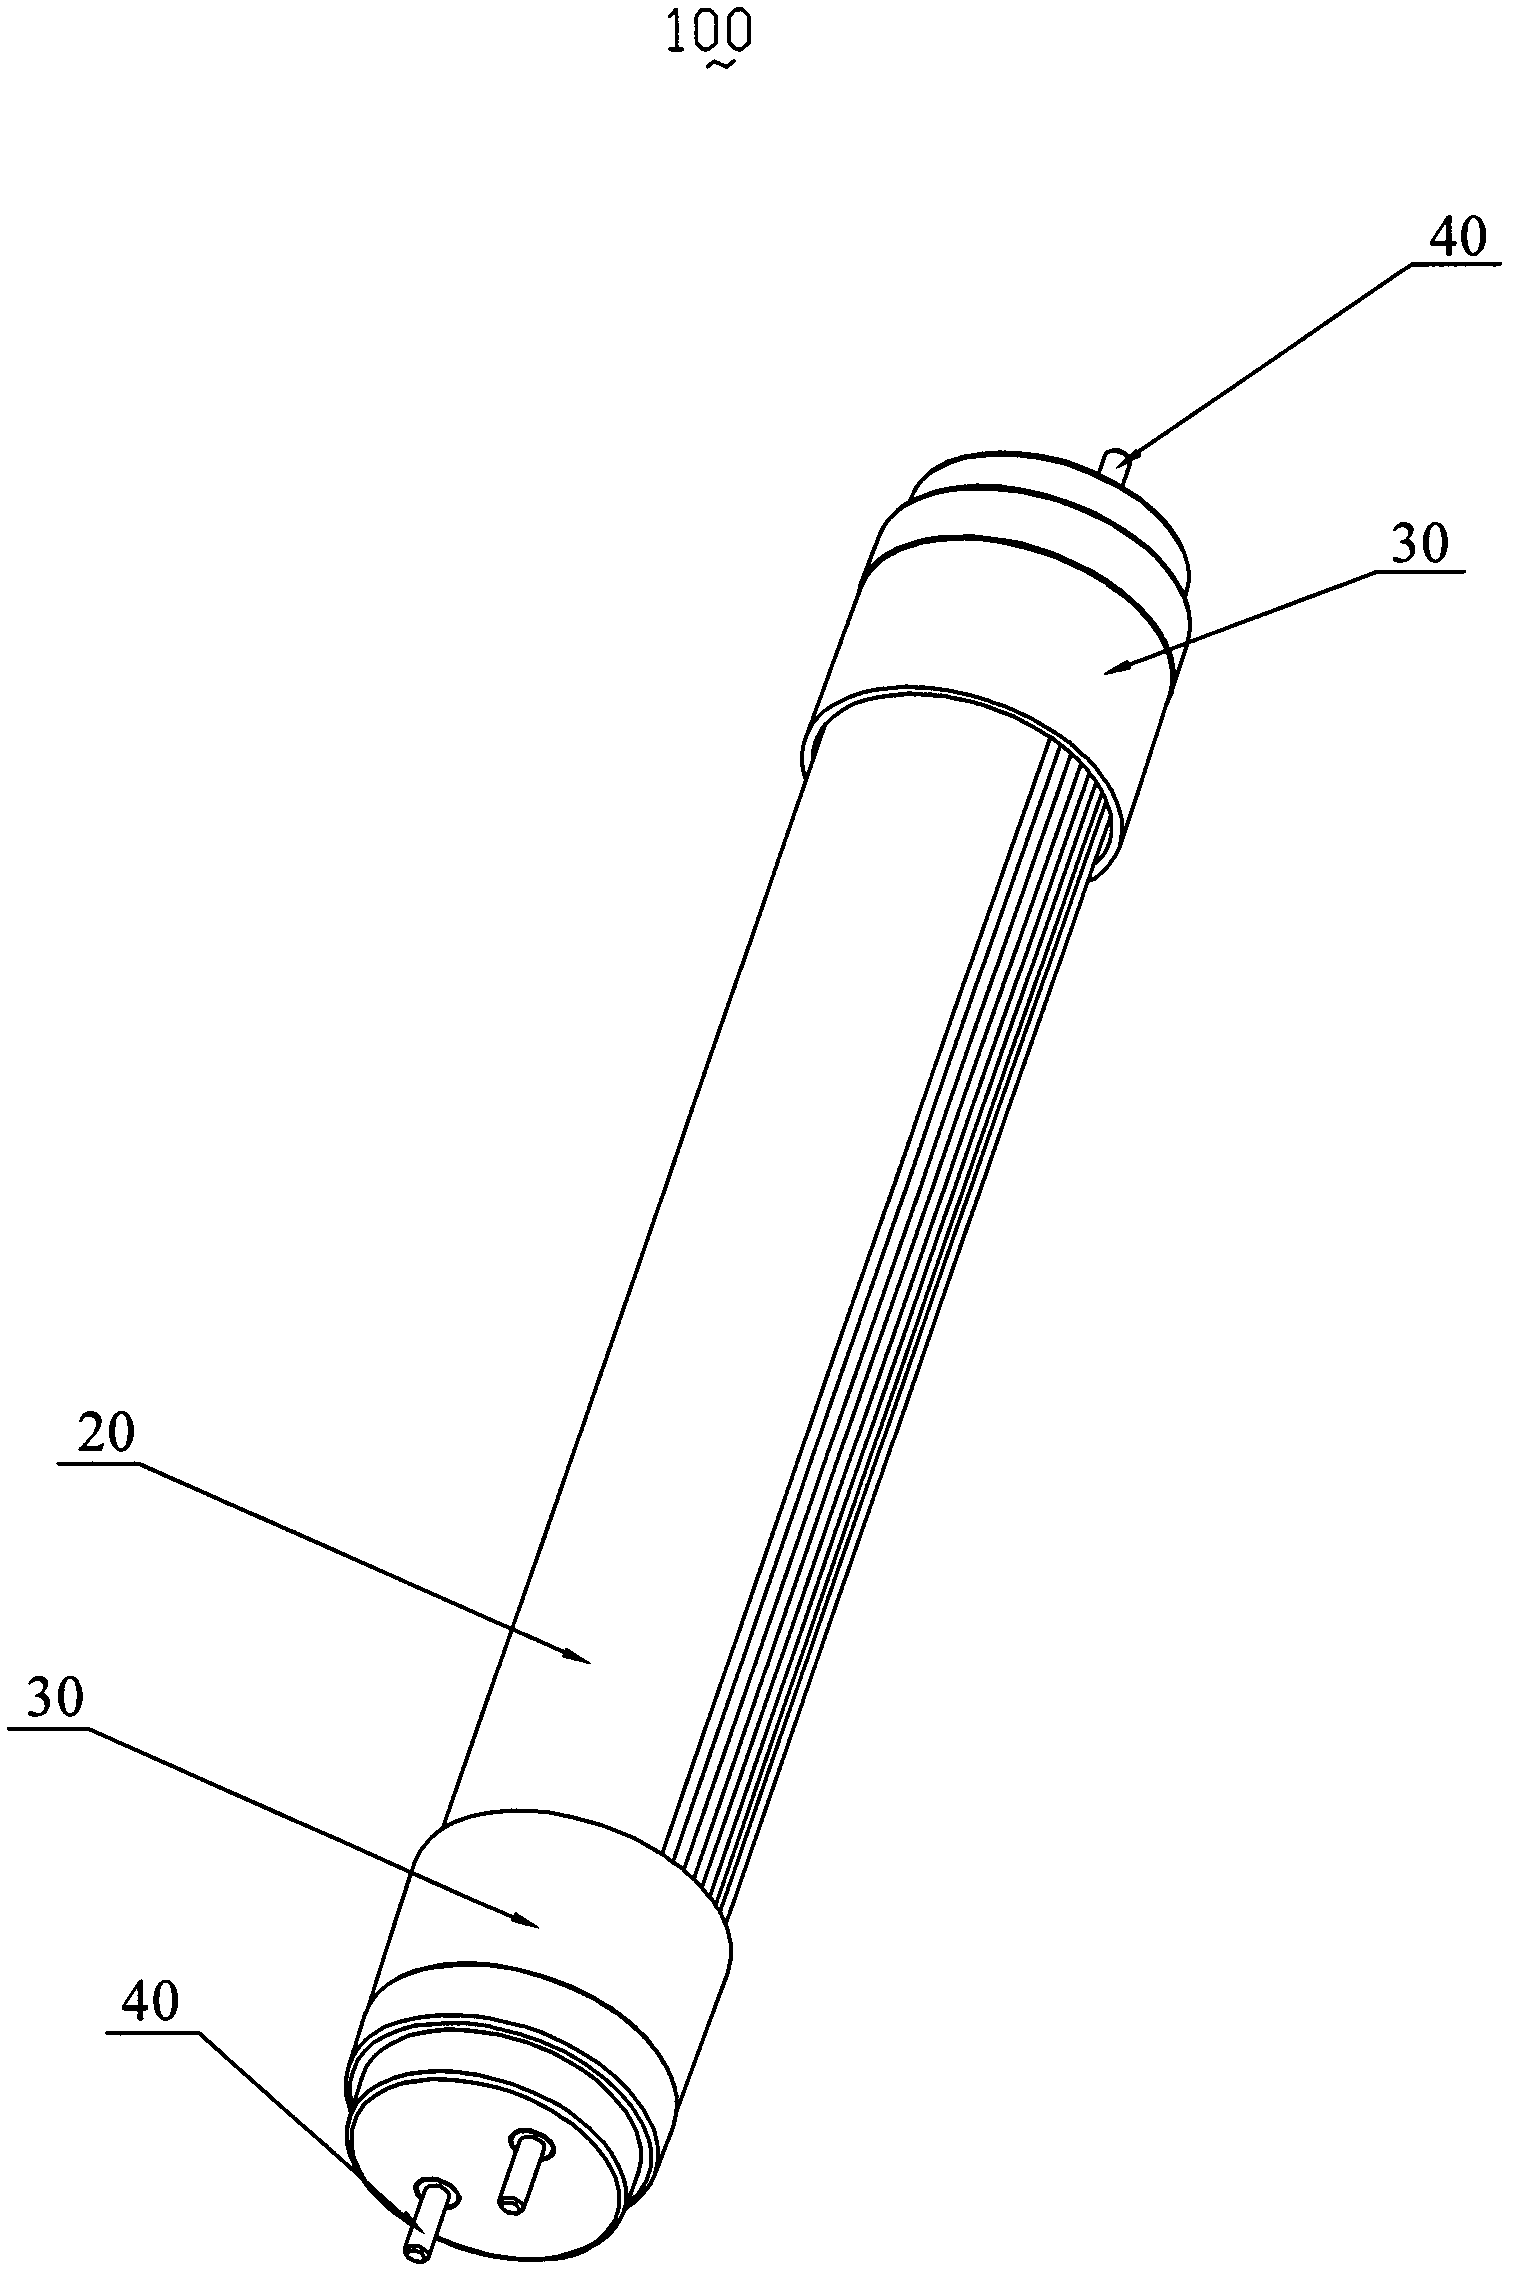 Light-emitting diode (LED) lamp tube with adjustable angle